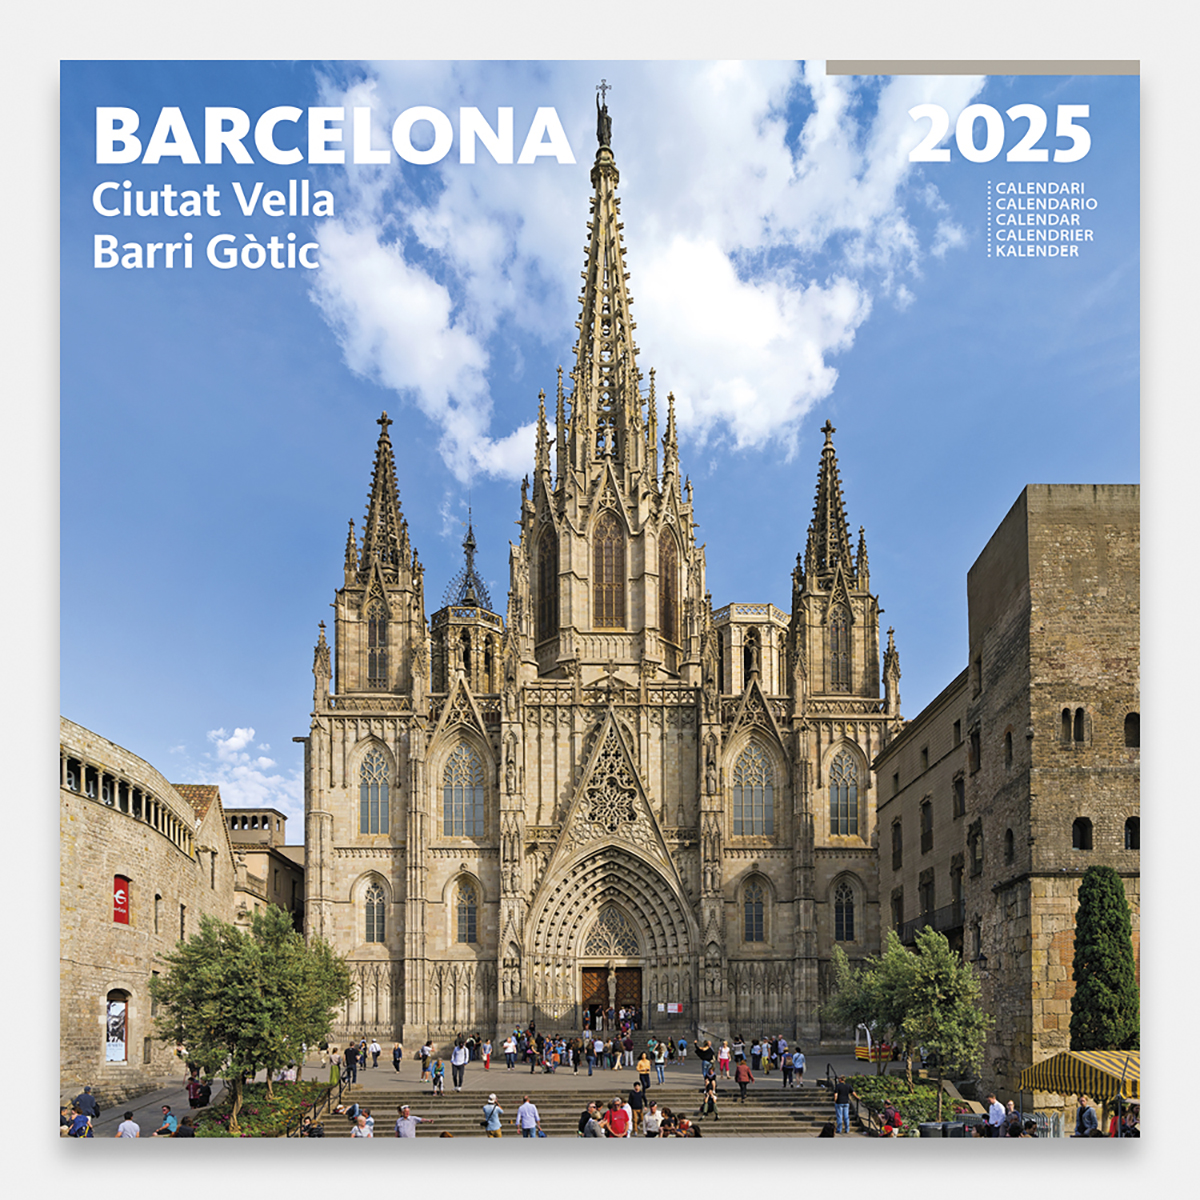 Calendari 2025 Barcelona. Ciutat Vella 25bg3 calendario pared 2025 barcelona